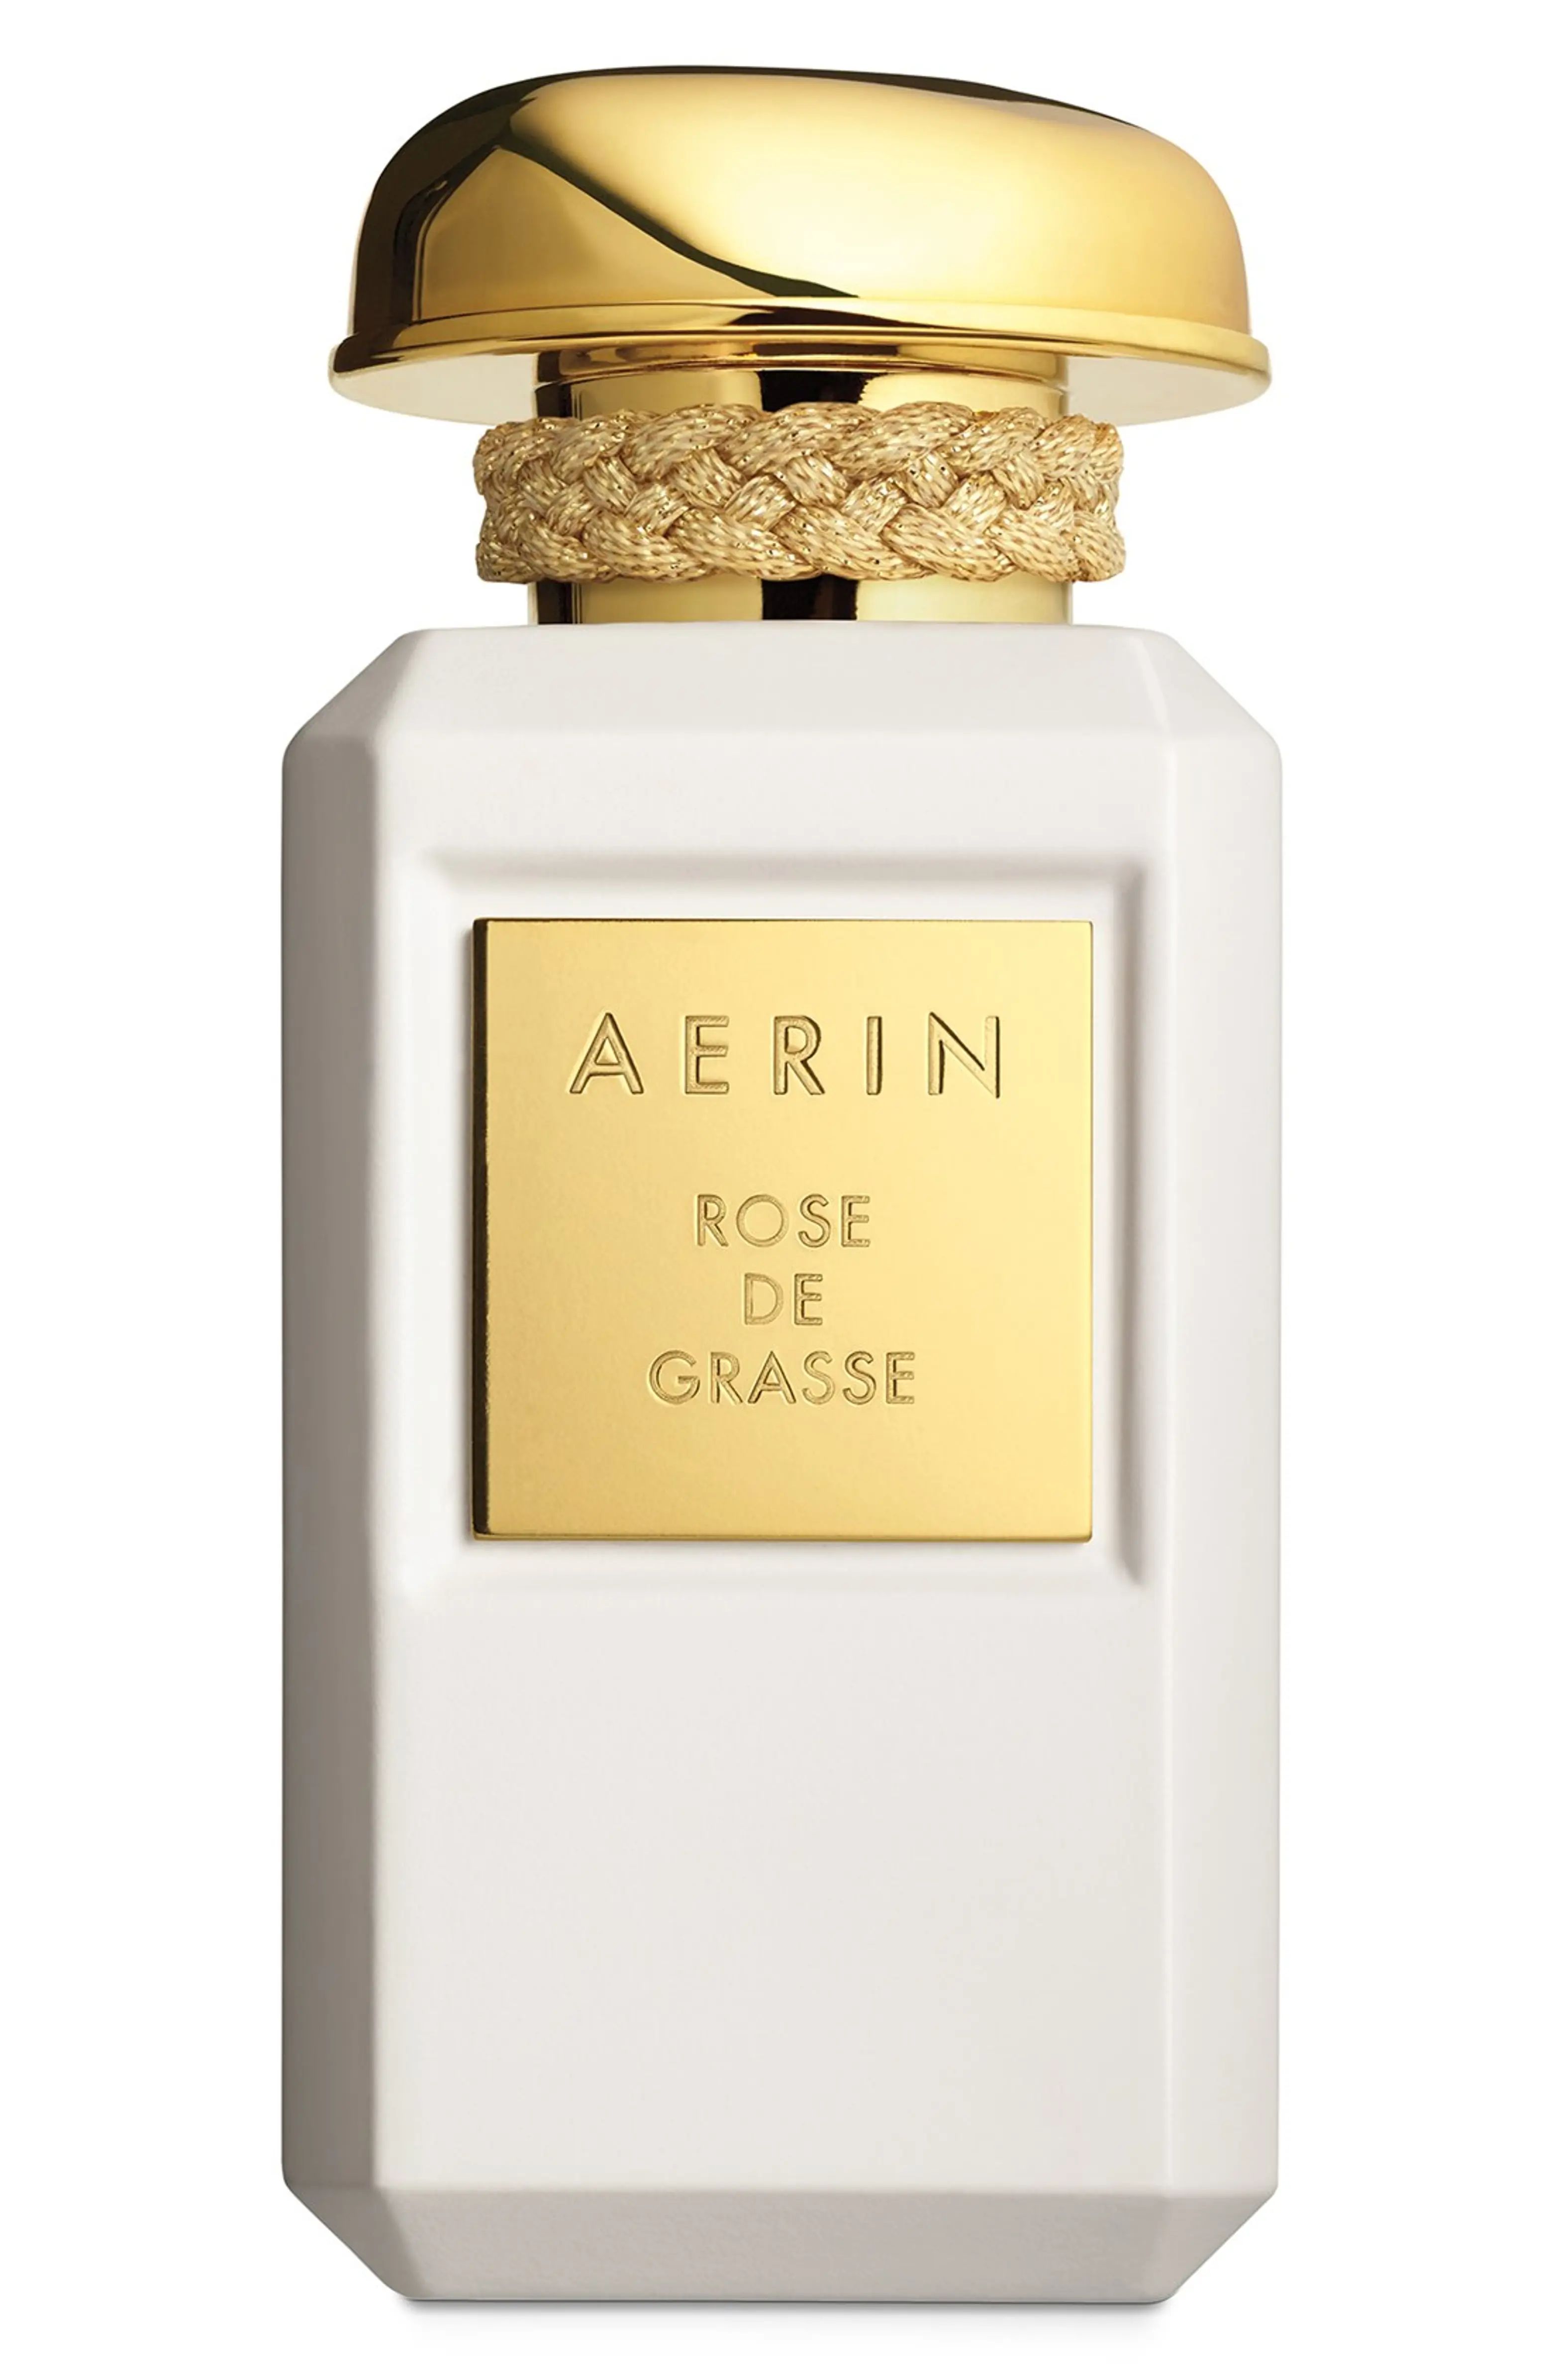 AERIN Beauty Rose de Grasse Parfum | Nordstrom